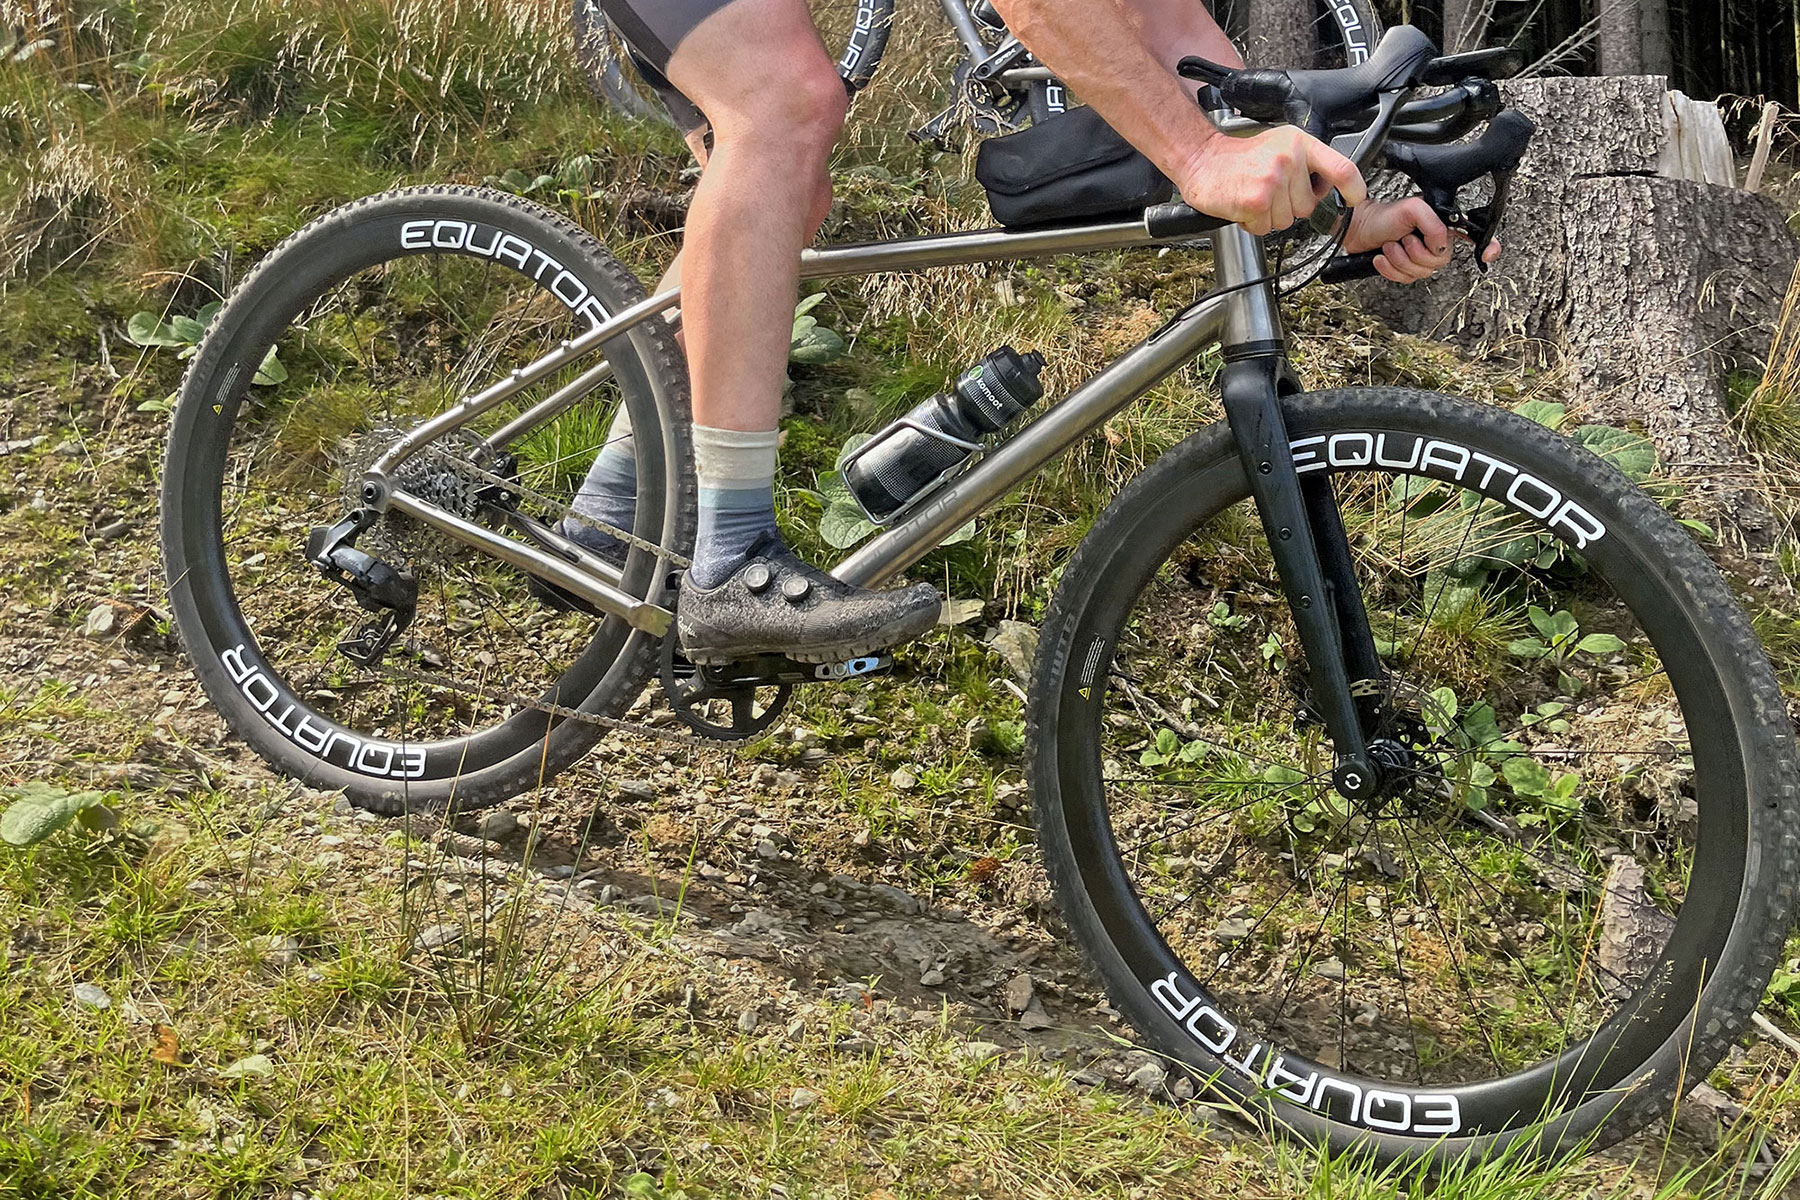 Equator Yasei titanium affordable gravel bike review, riding